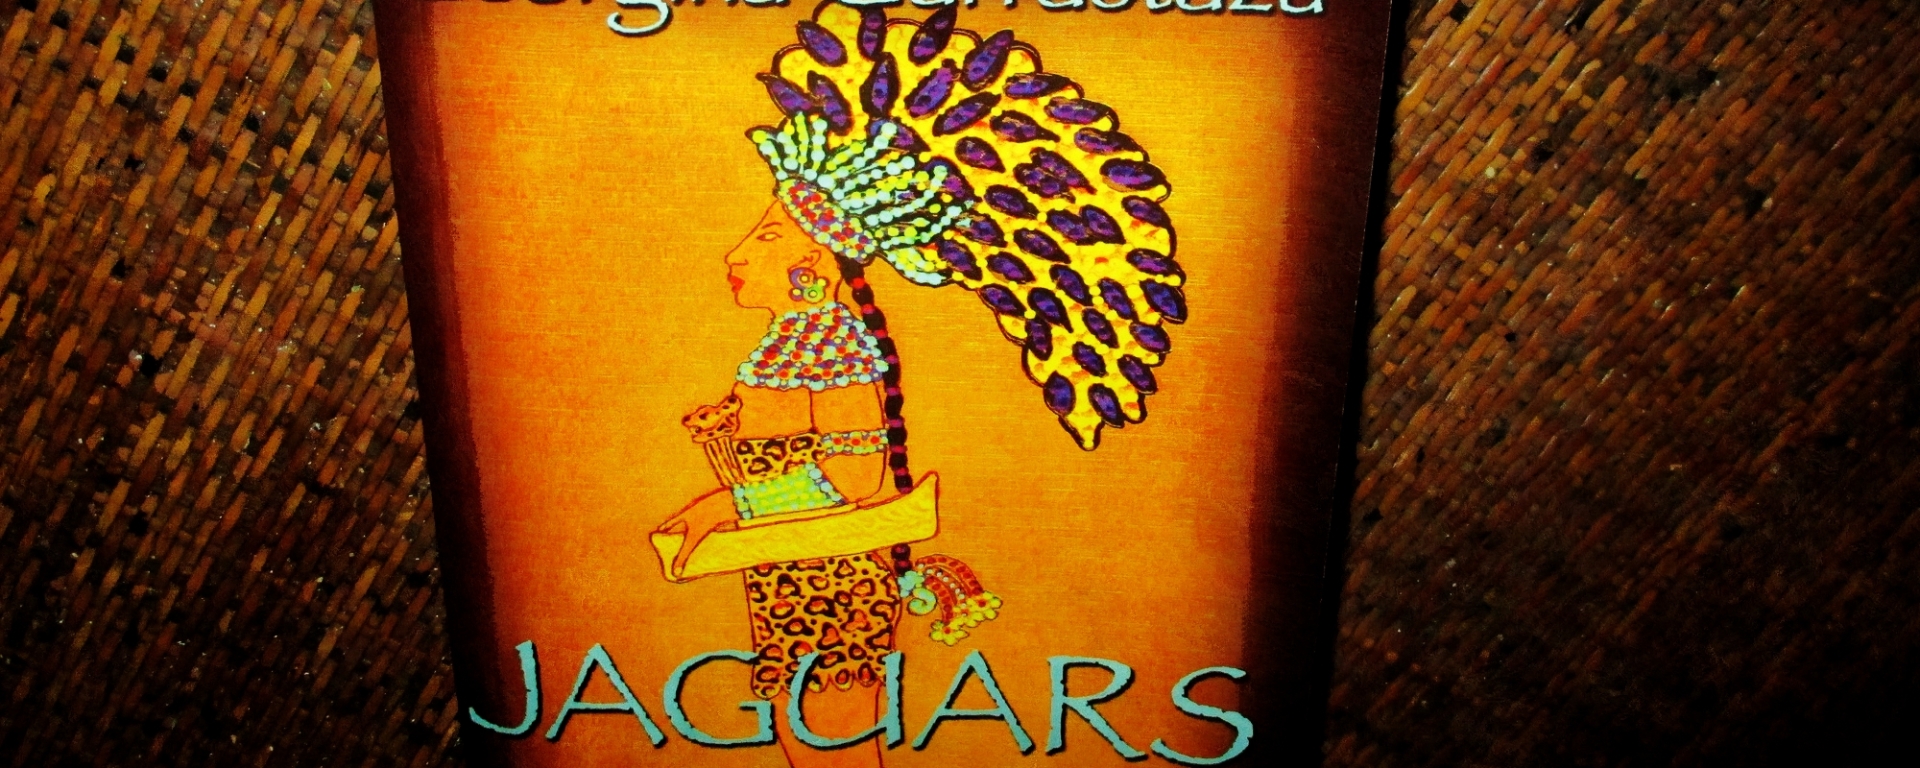 Jaguars, by Georgina Garrastazu